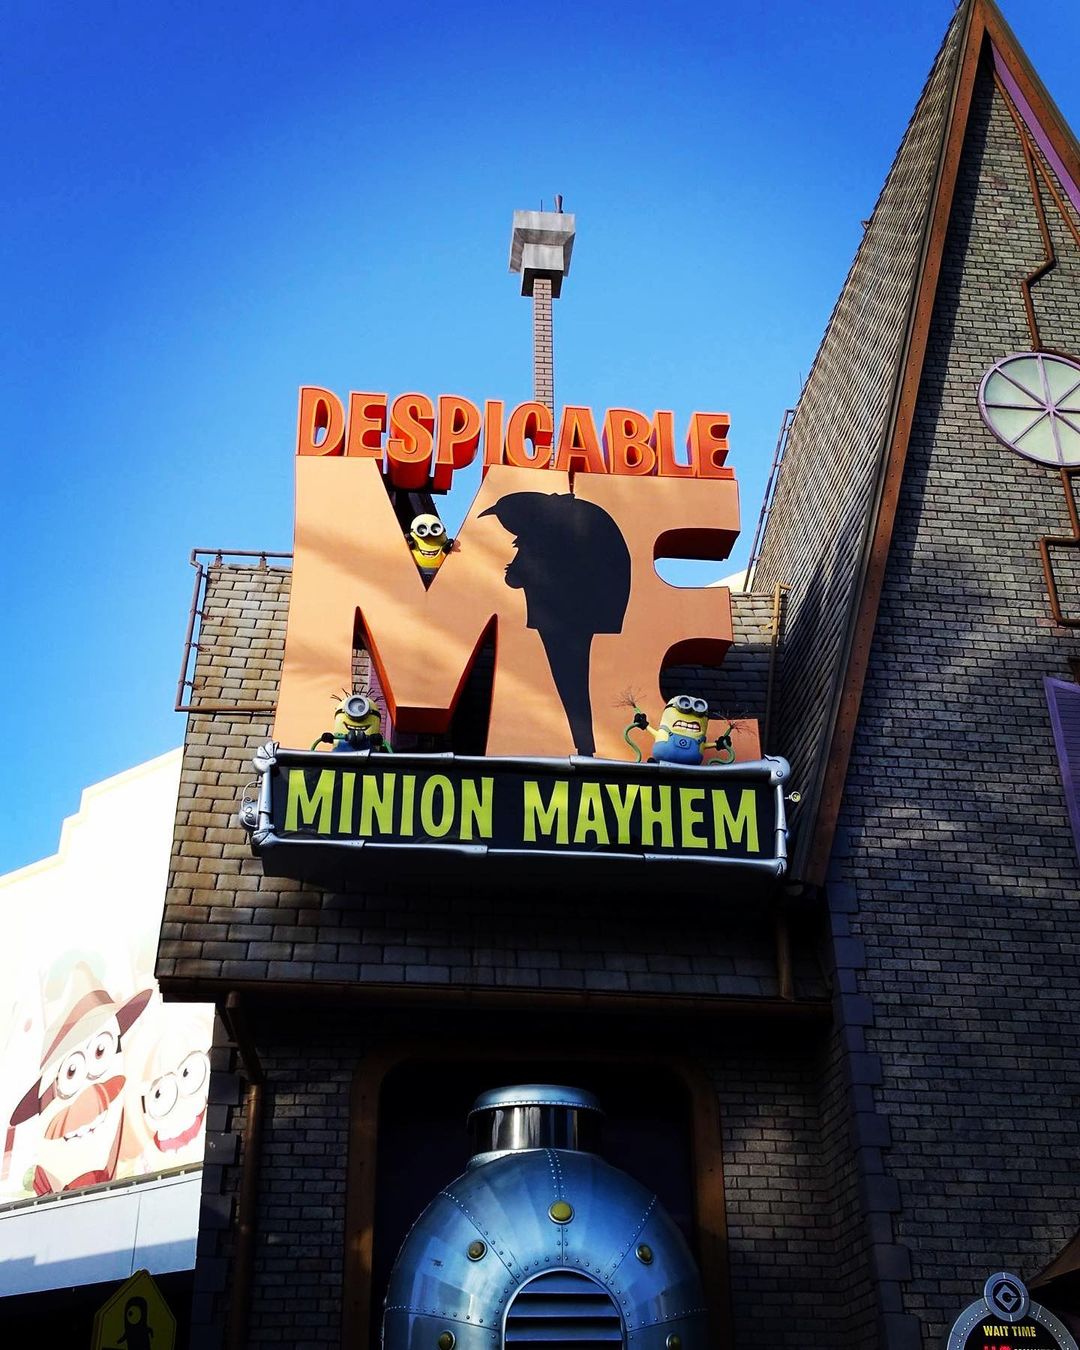 Despicable Me Minion Mayhem - Universal Studios Attraction